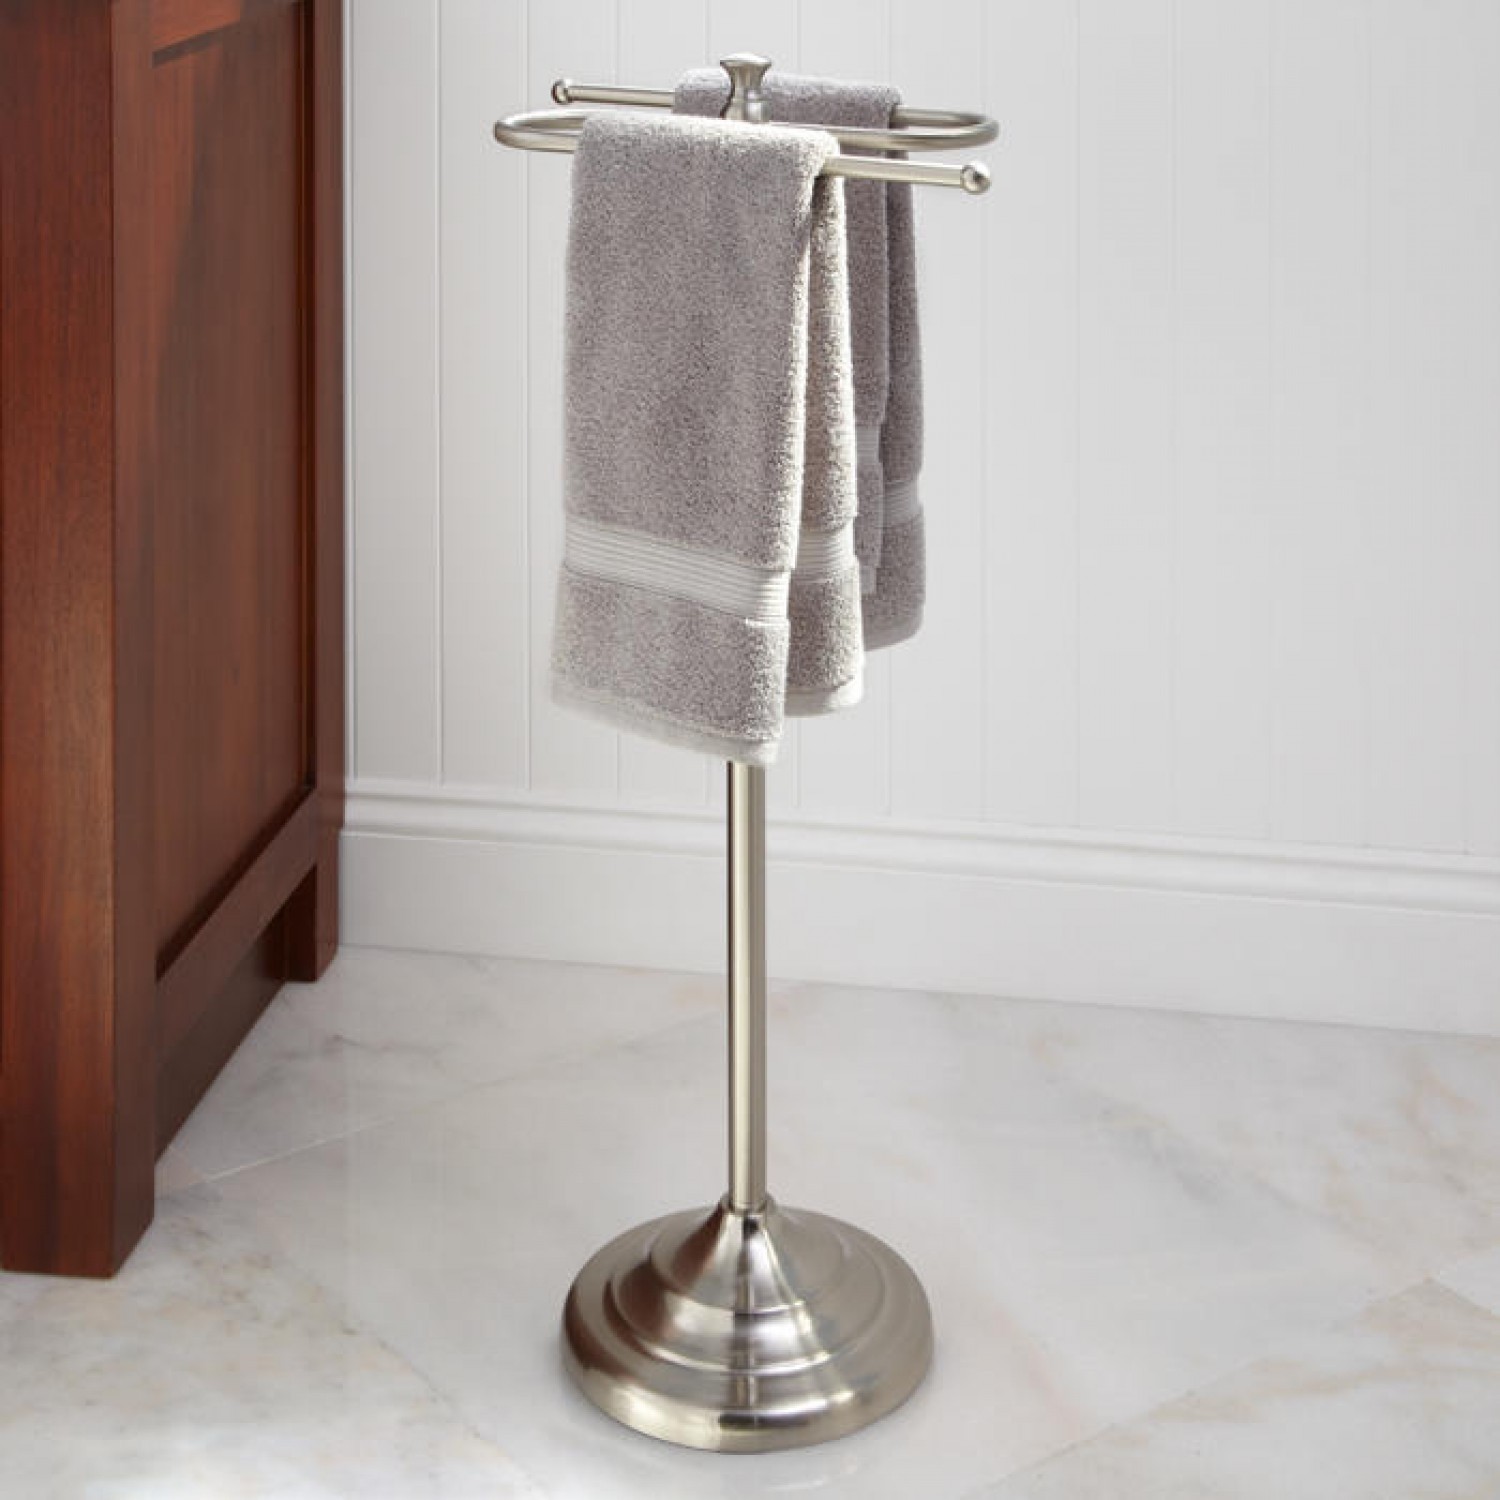 Popular items of hand towel stand homesfeed 2